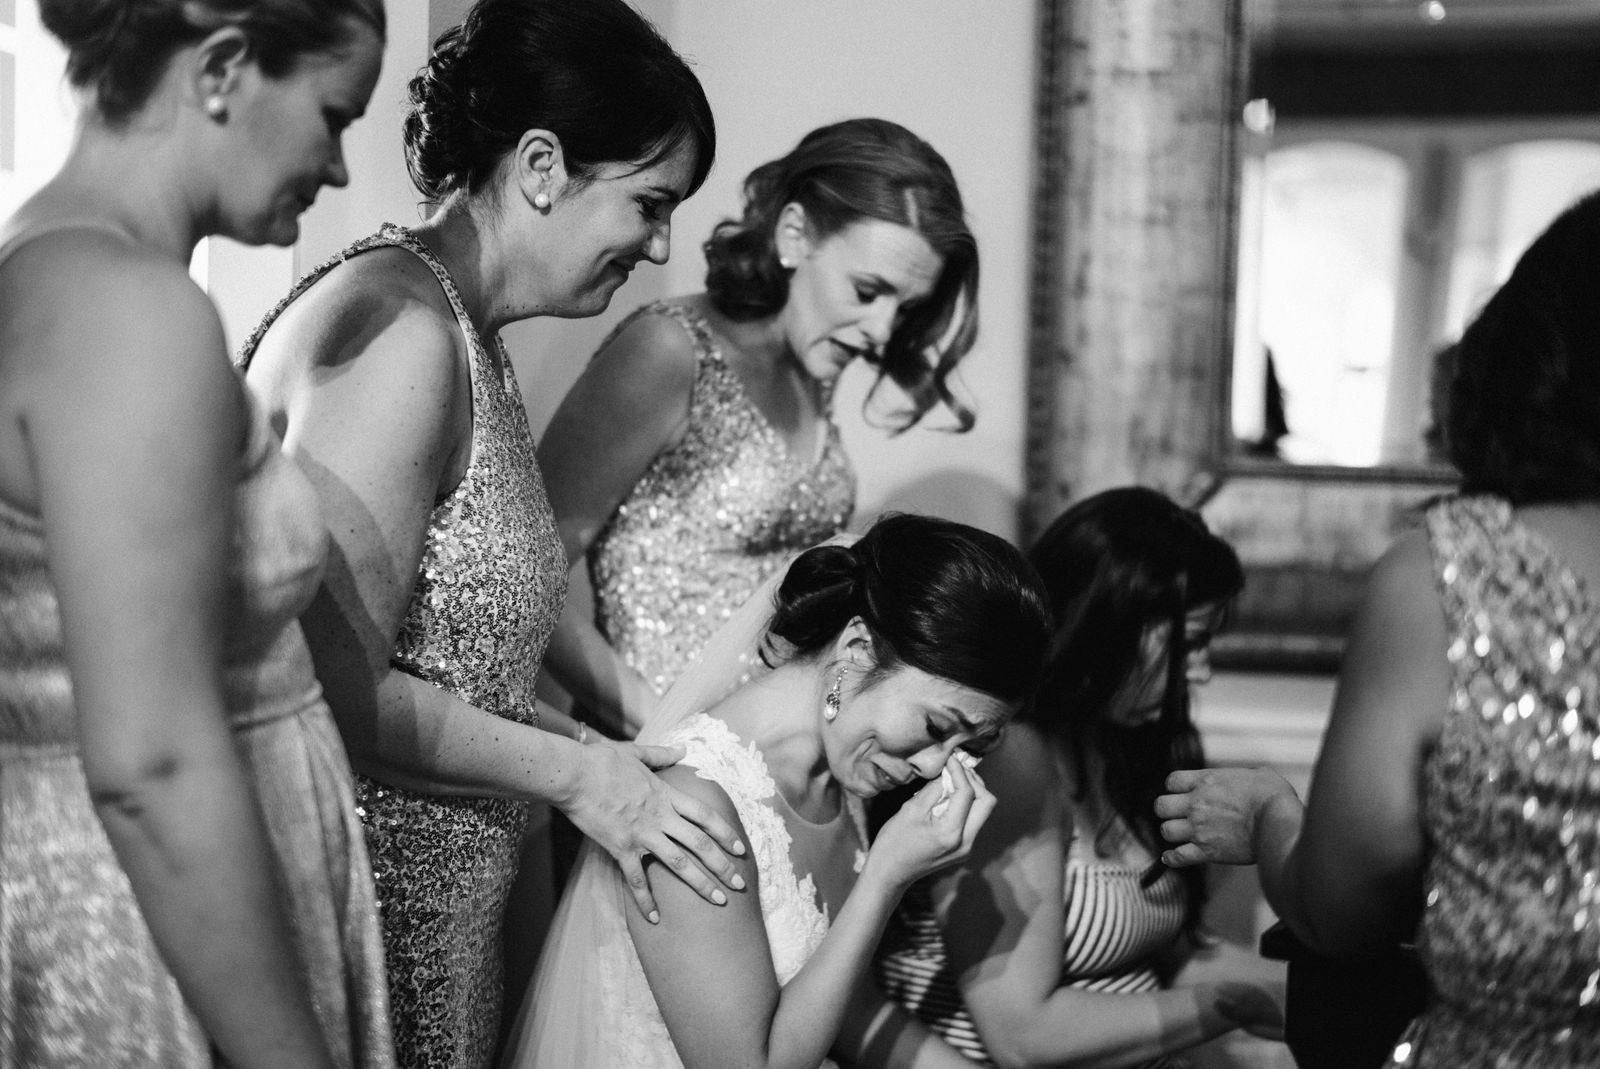 077-tearful-bride-praying-with-bridesmaids-on-leica-m240-by-washington-documentary-photographer-ryan-flynn.jpg